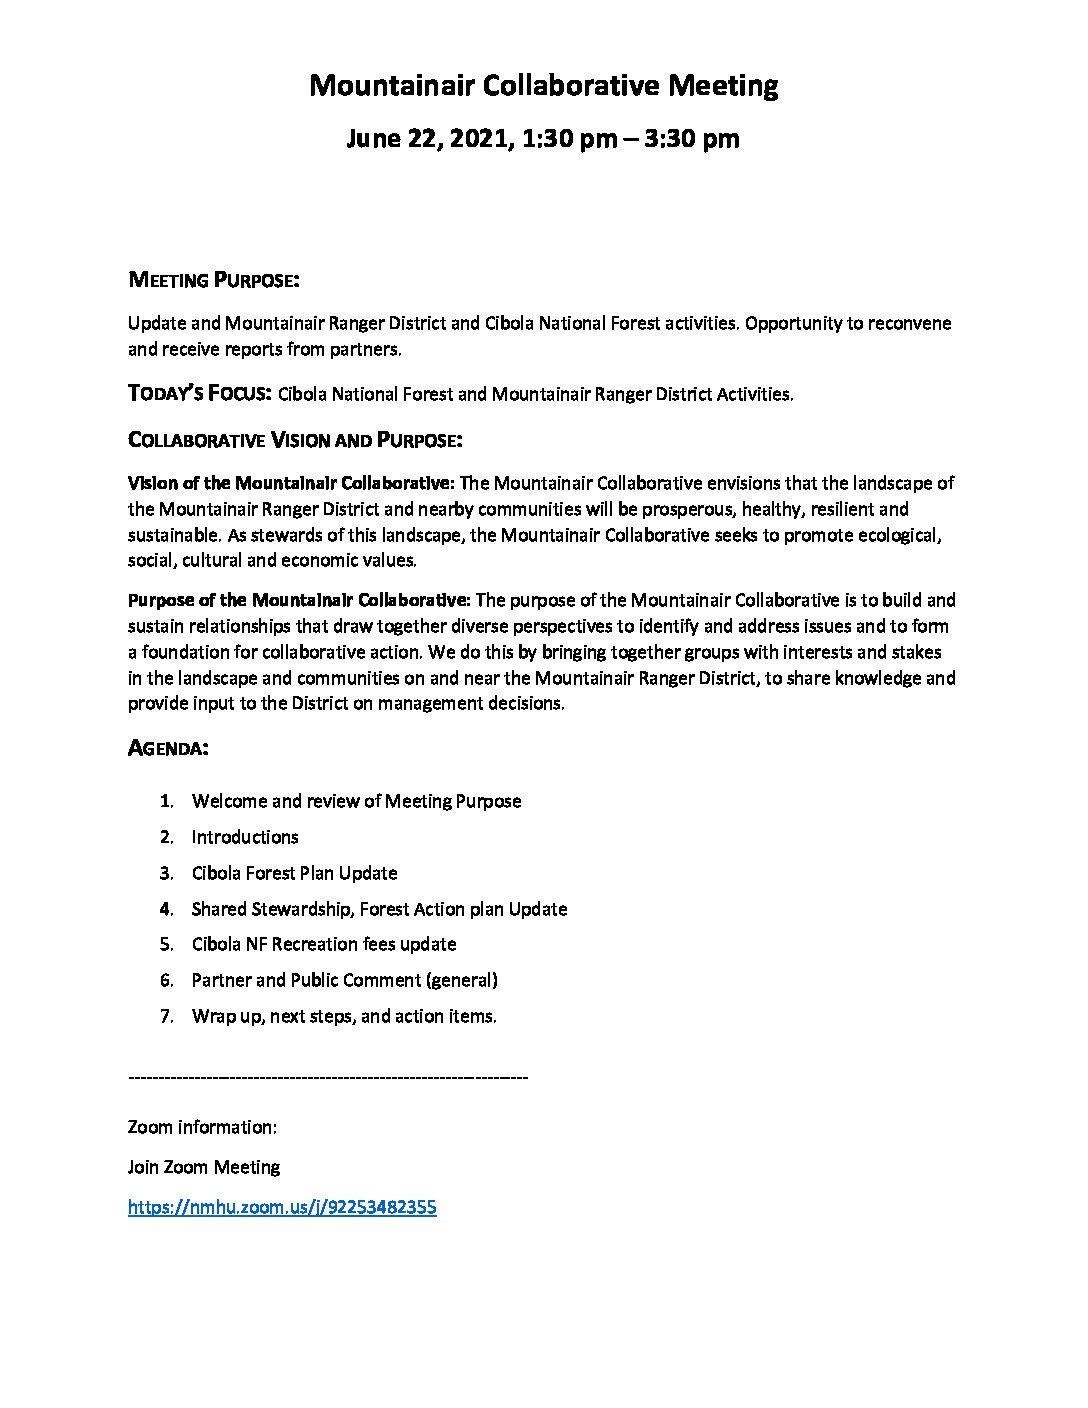 Mountainair Collaborative Agenda June 22 2021